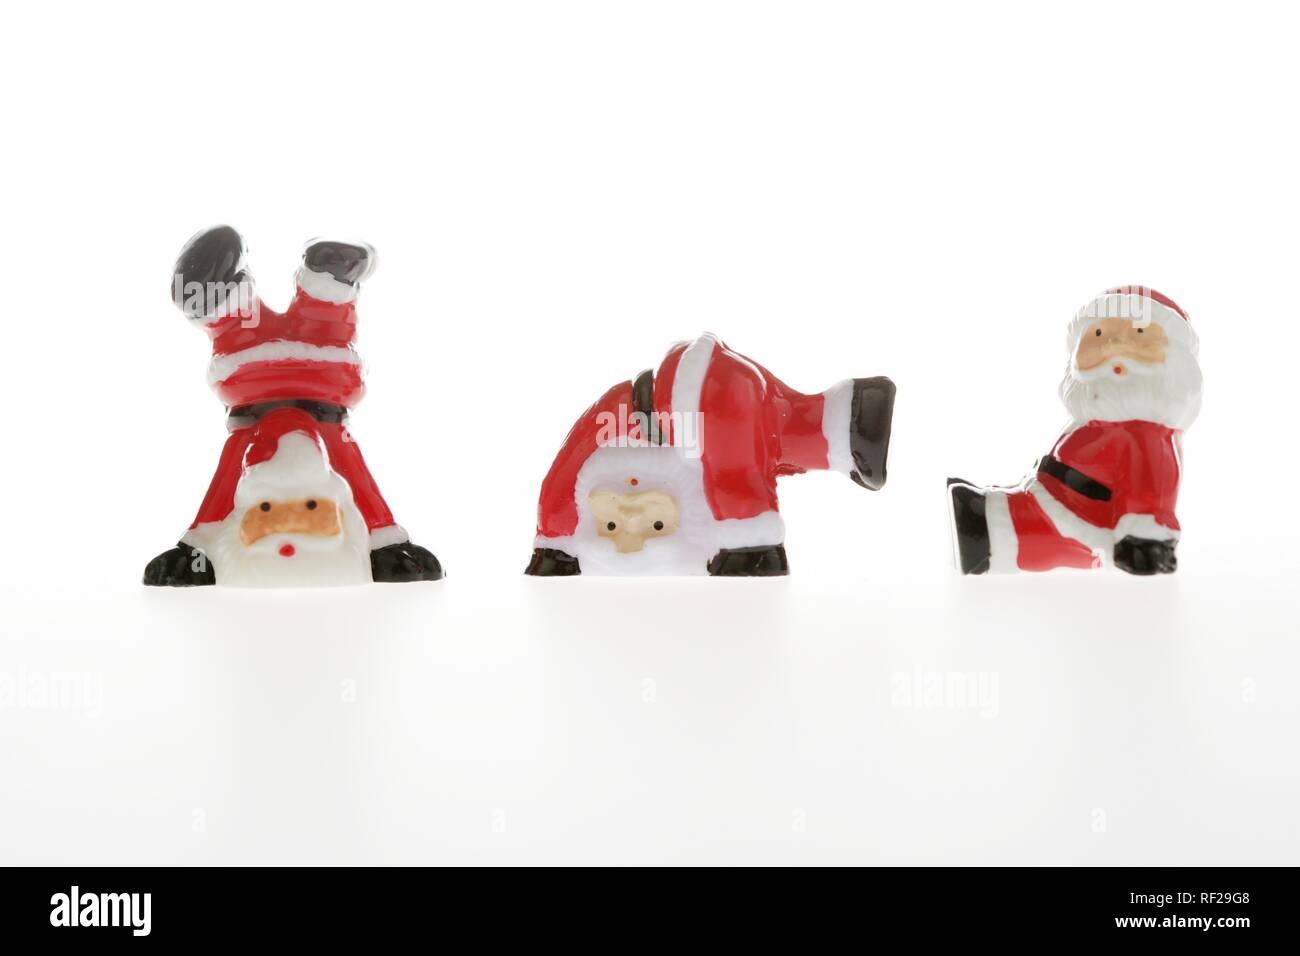 Plastic Santas doing cartwheels Stock Photo - Alamy